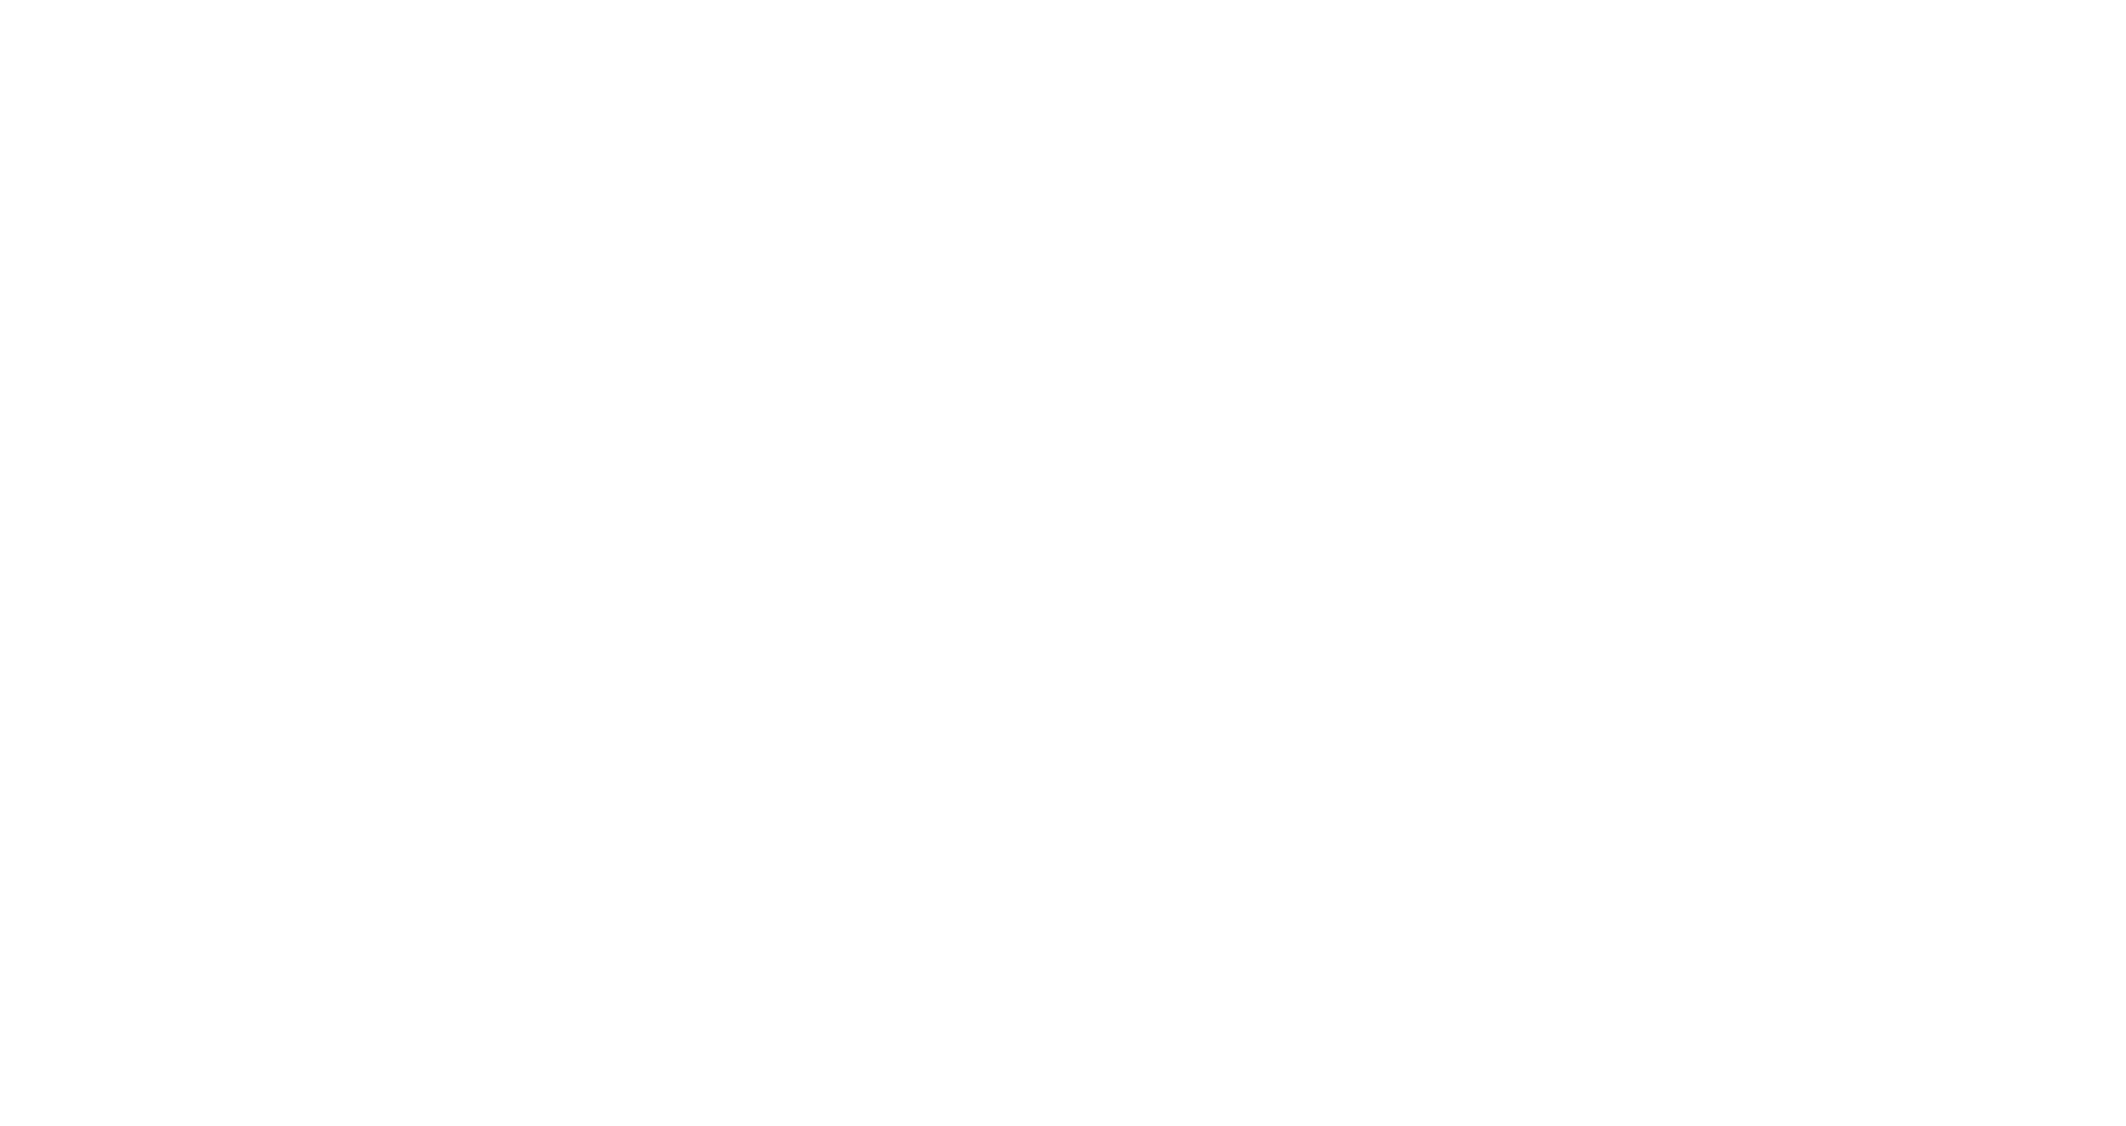 cVidya Networks